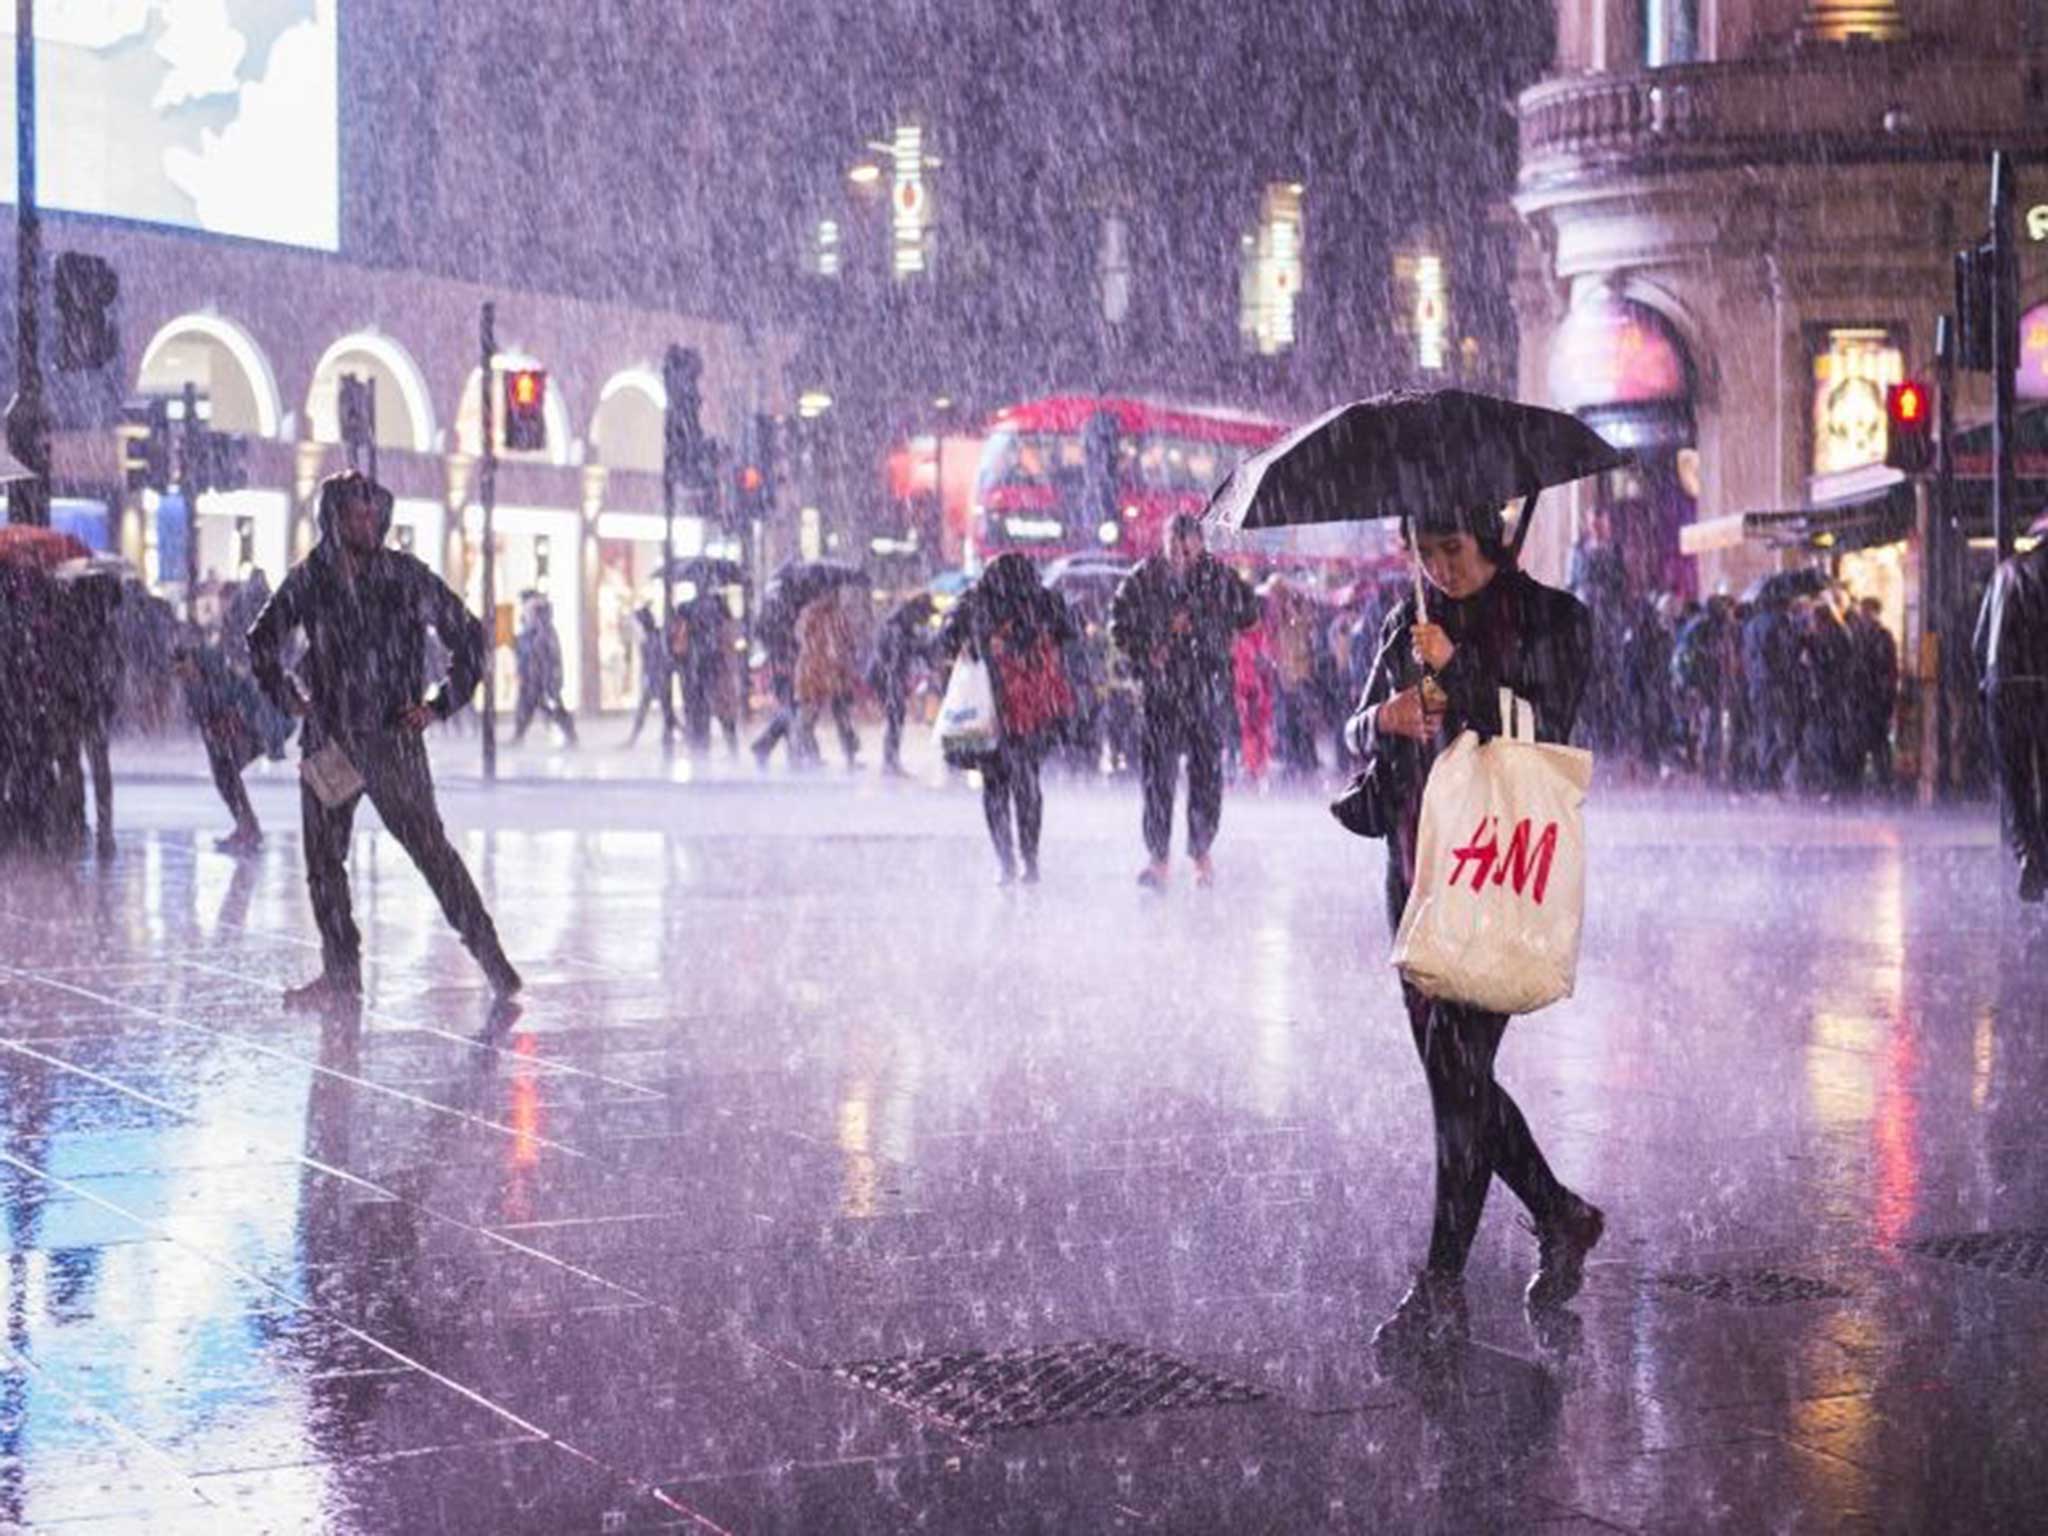 A woman walks through the rain in central London on Saturday